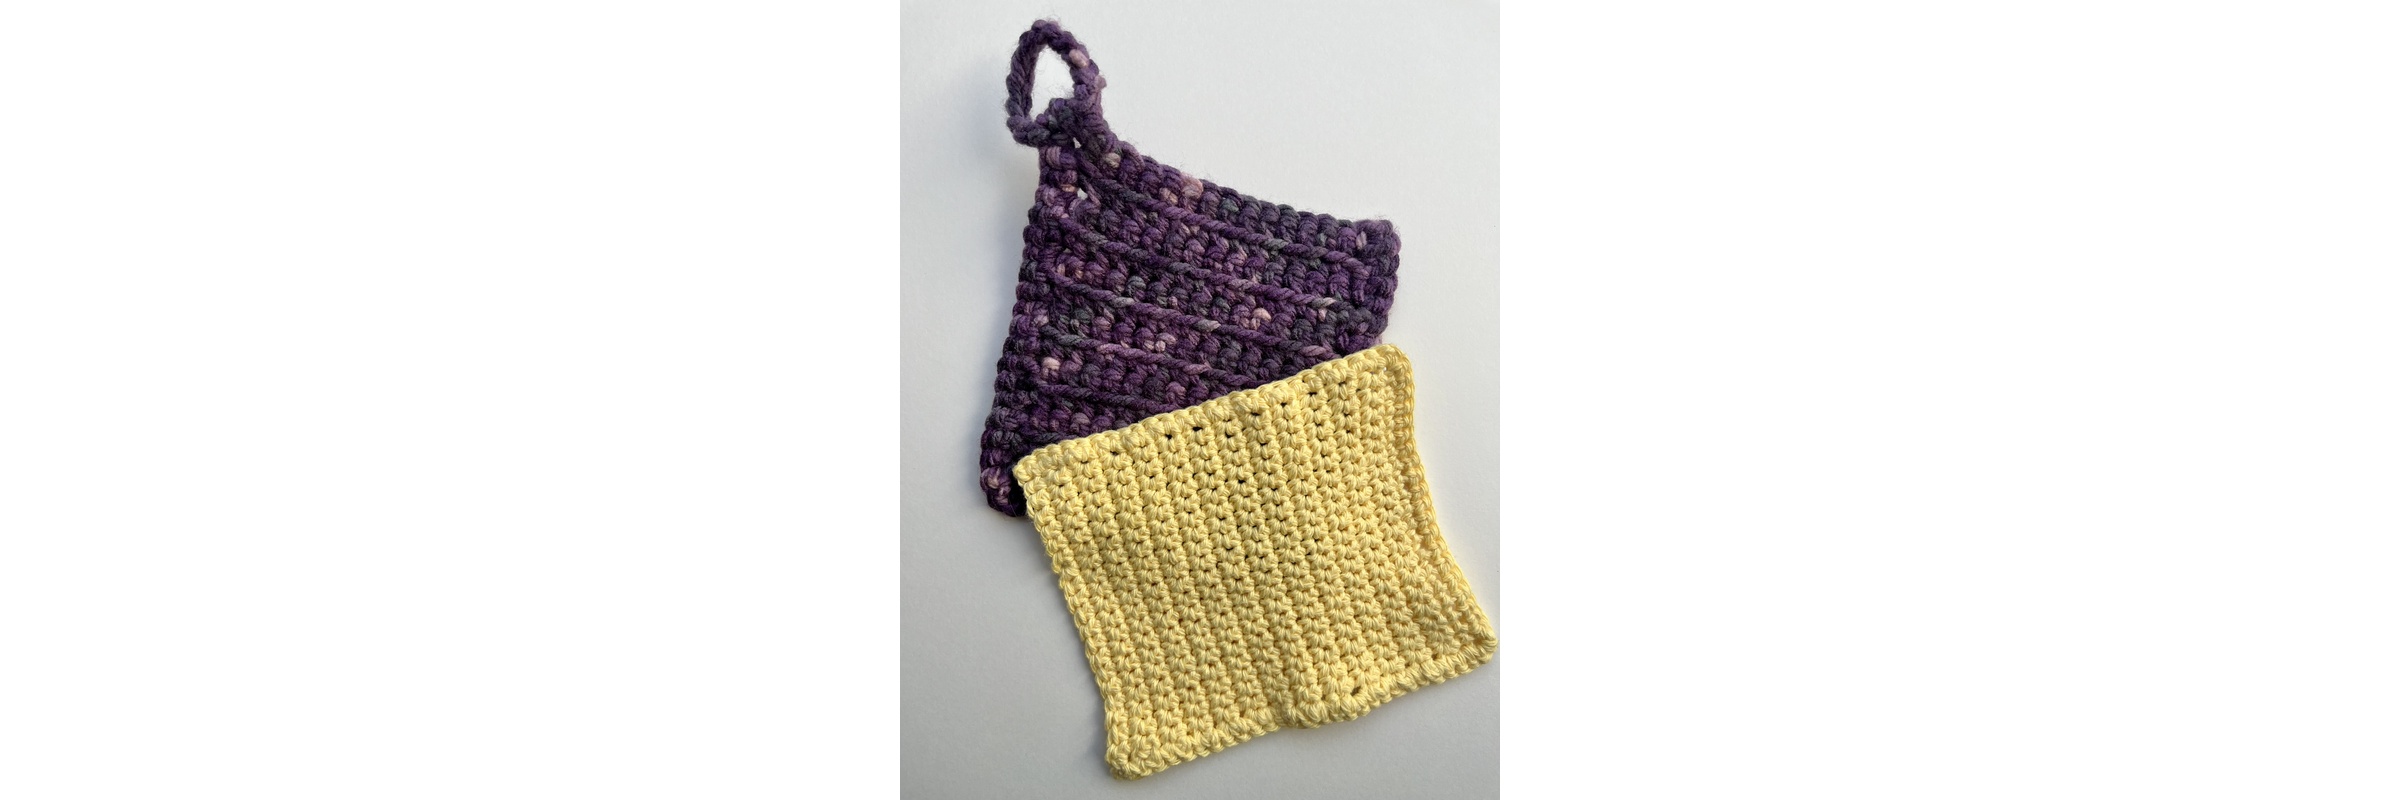 Alicia Medina - Introduction to Crochet - Kitchen Cloth Project